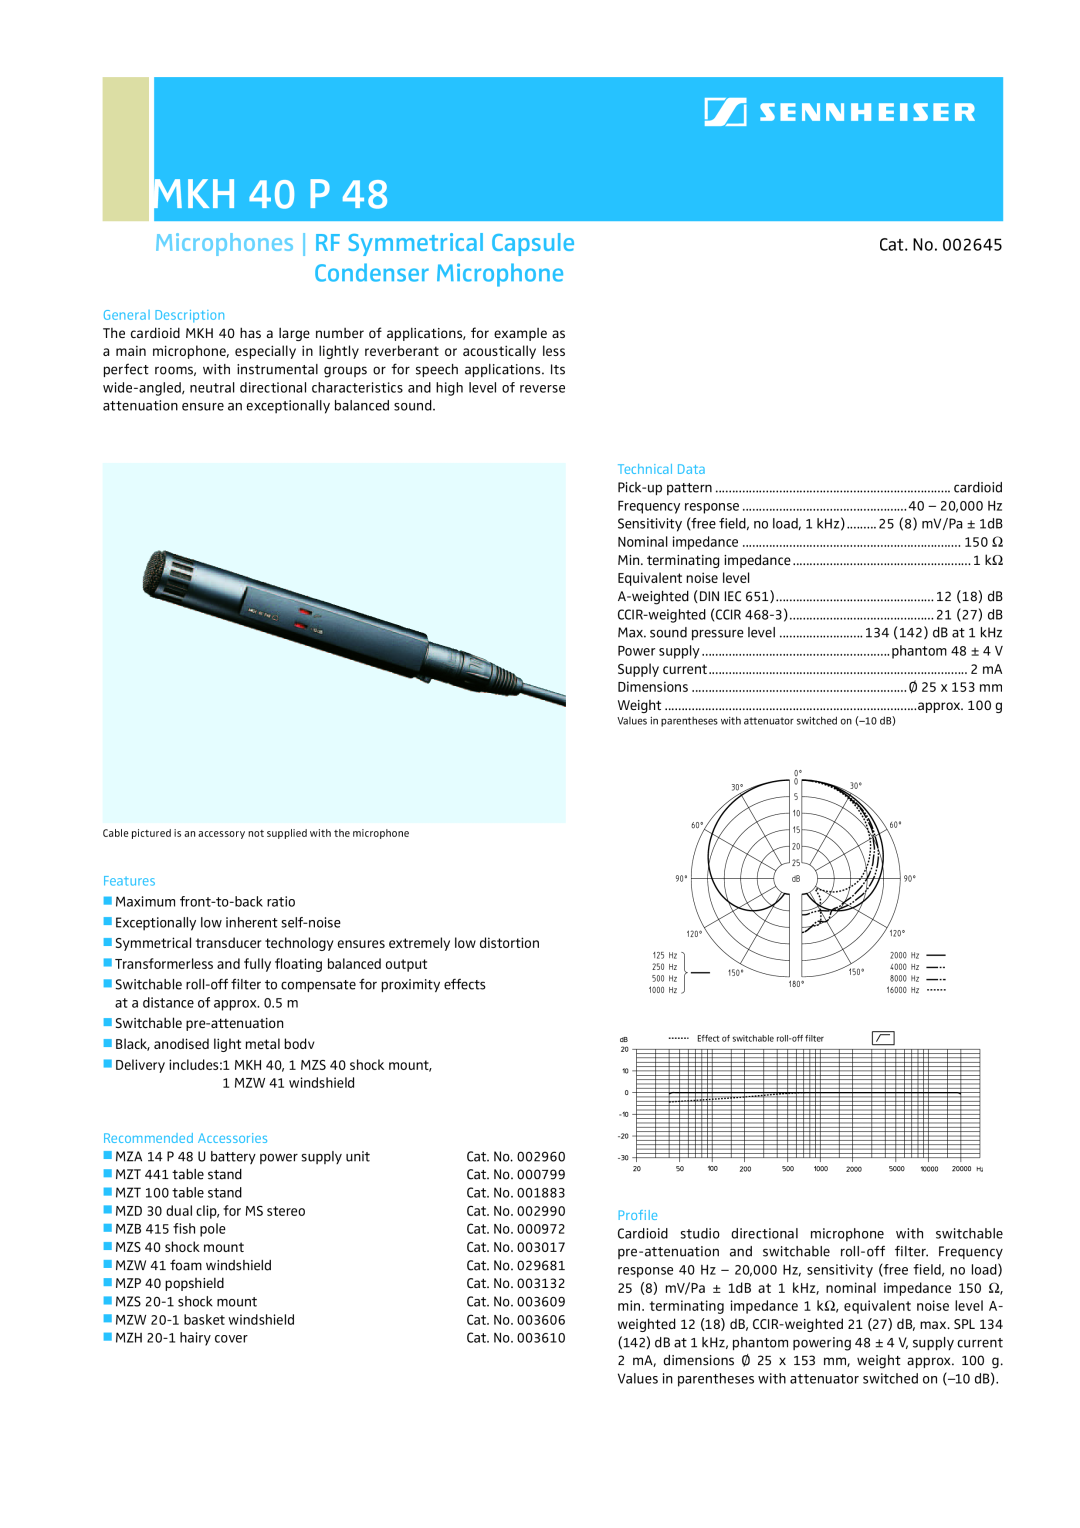 Sennheiser MKH 40 P 48 dimensions Microphones RF Symmetrical Capsule Condenser Microphone, Cat. No, General Description 